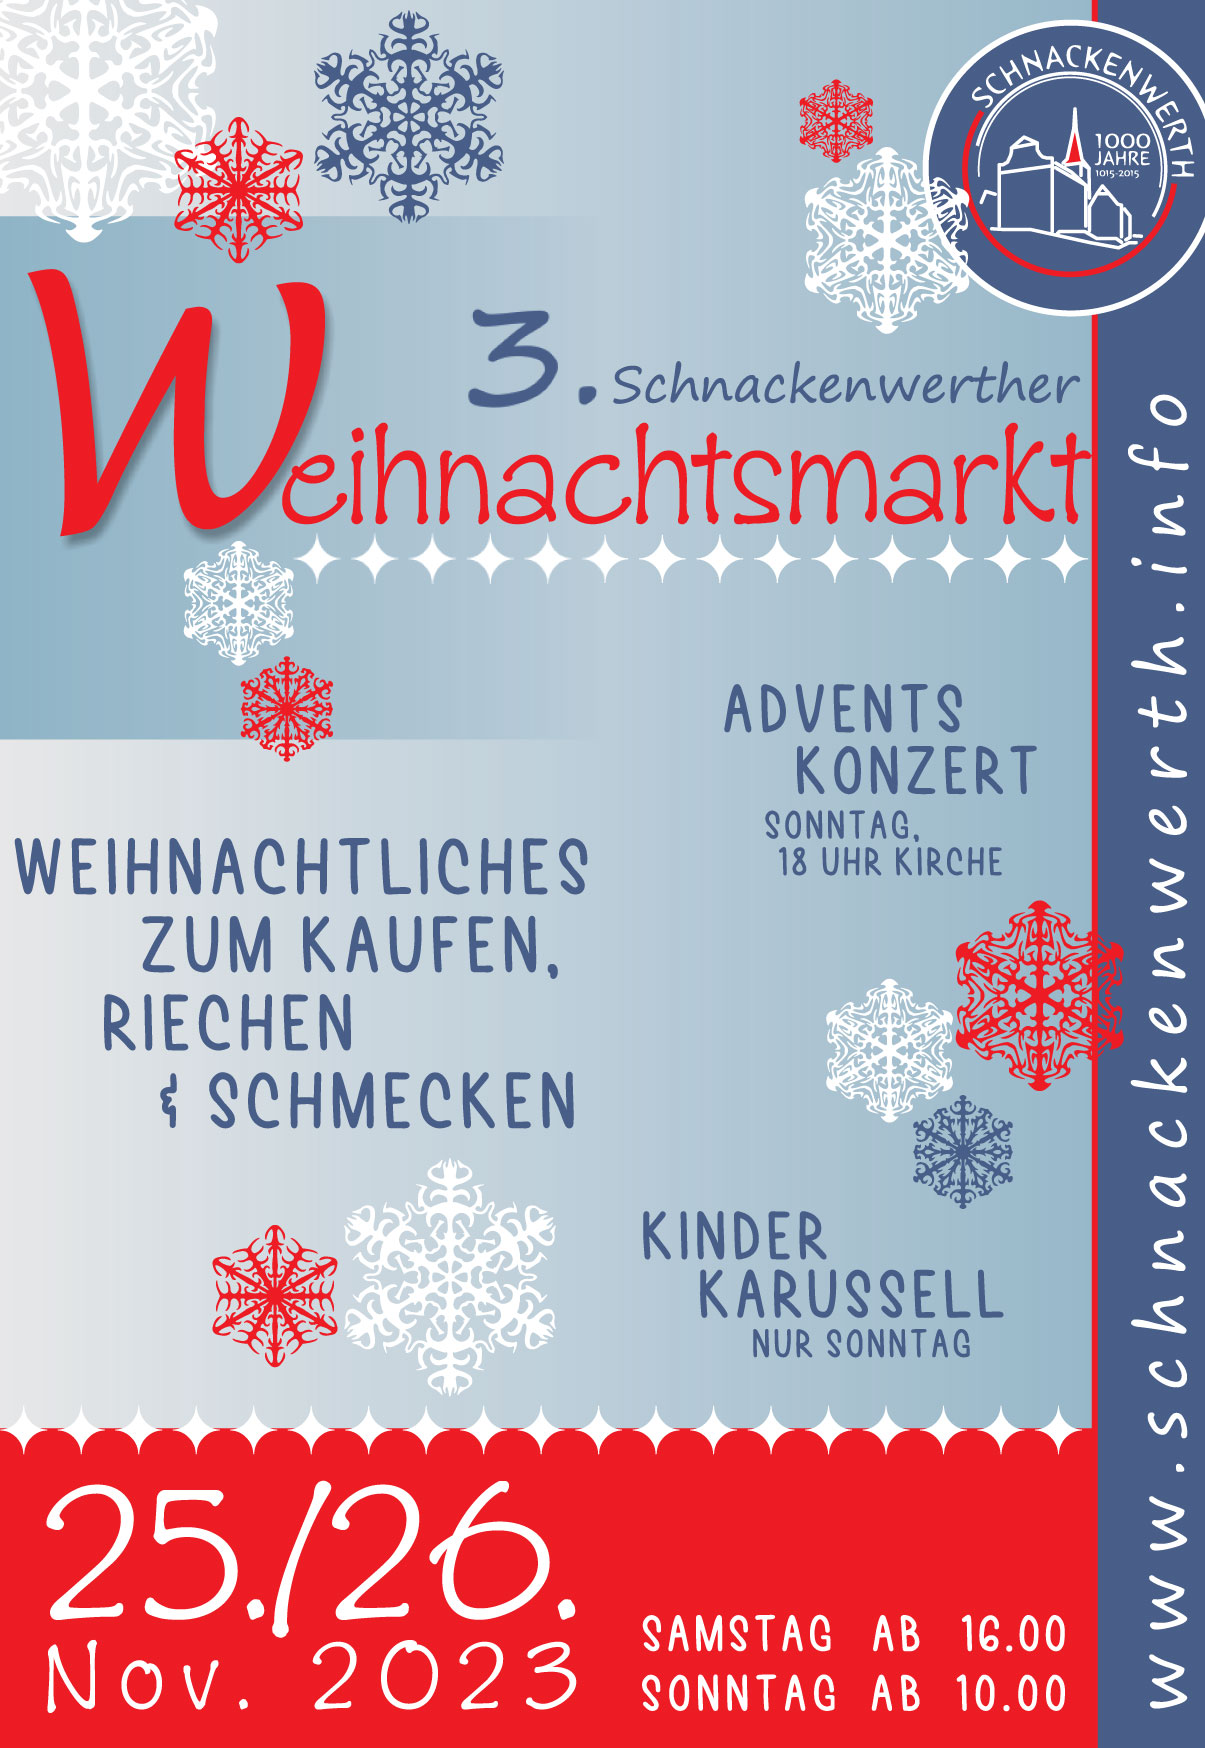 (c) Schnackenwerth.info